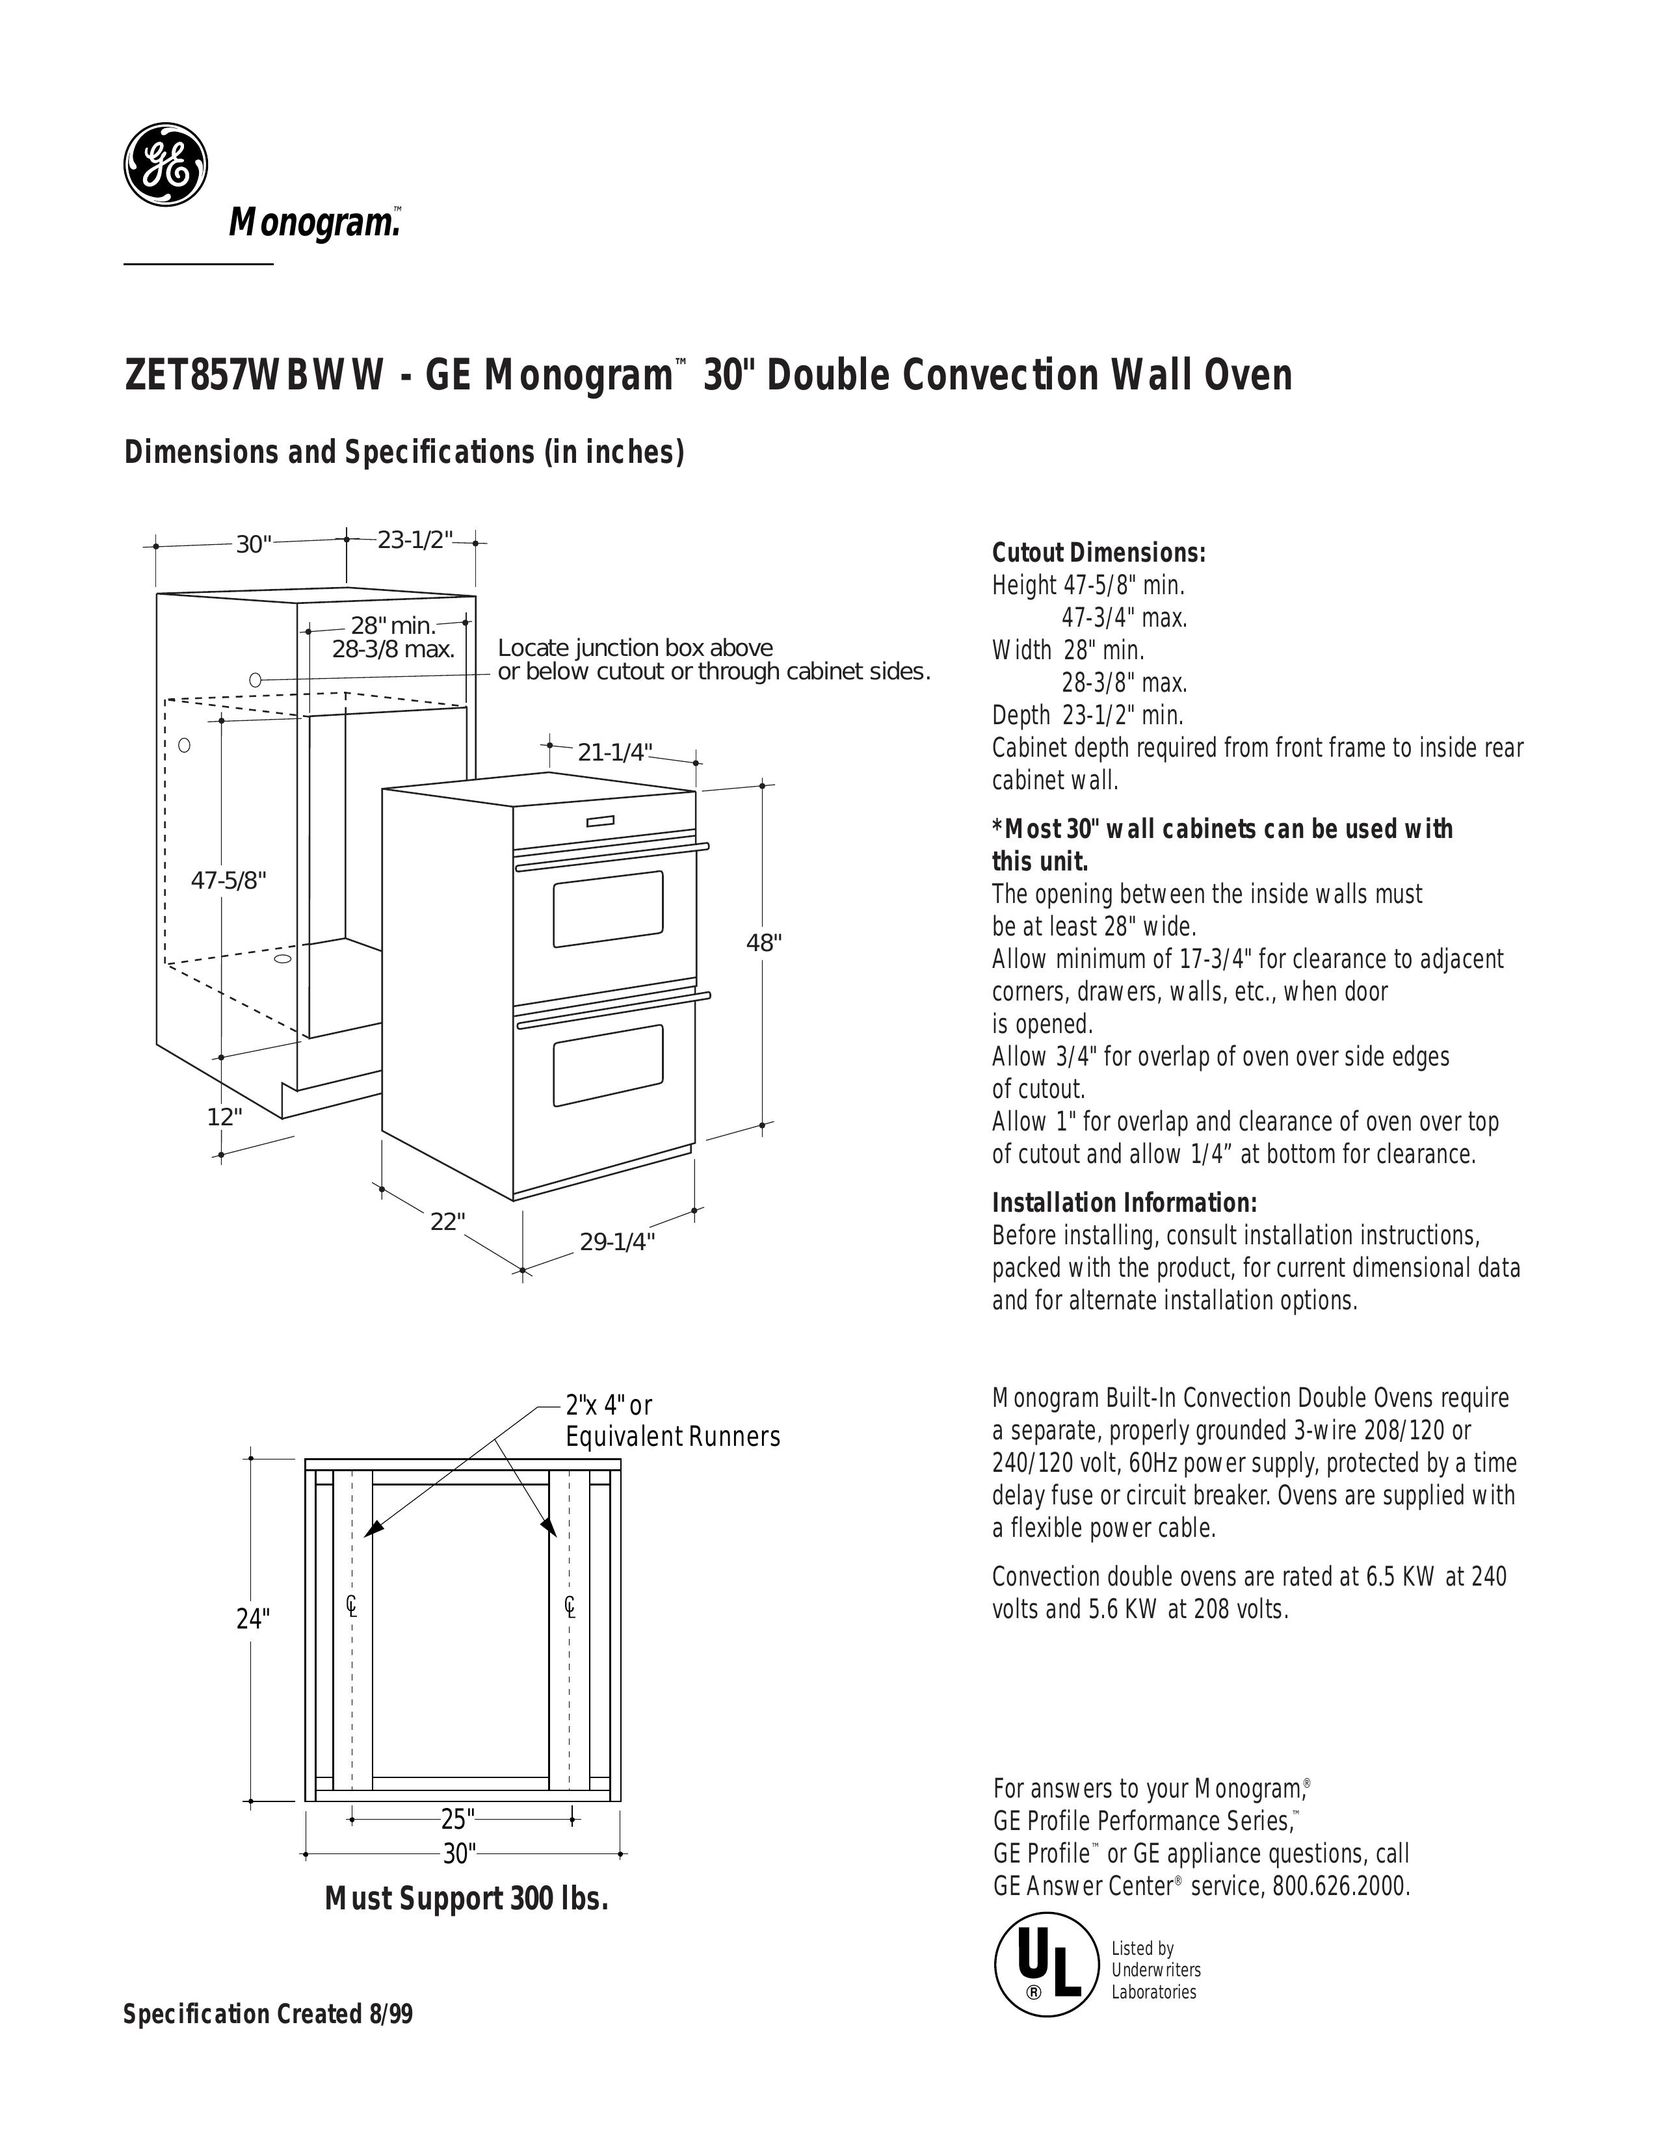 GE Monogram ZET857WBWW Double Oven User Manual